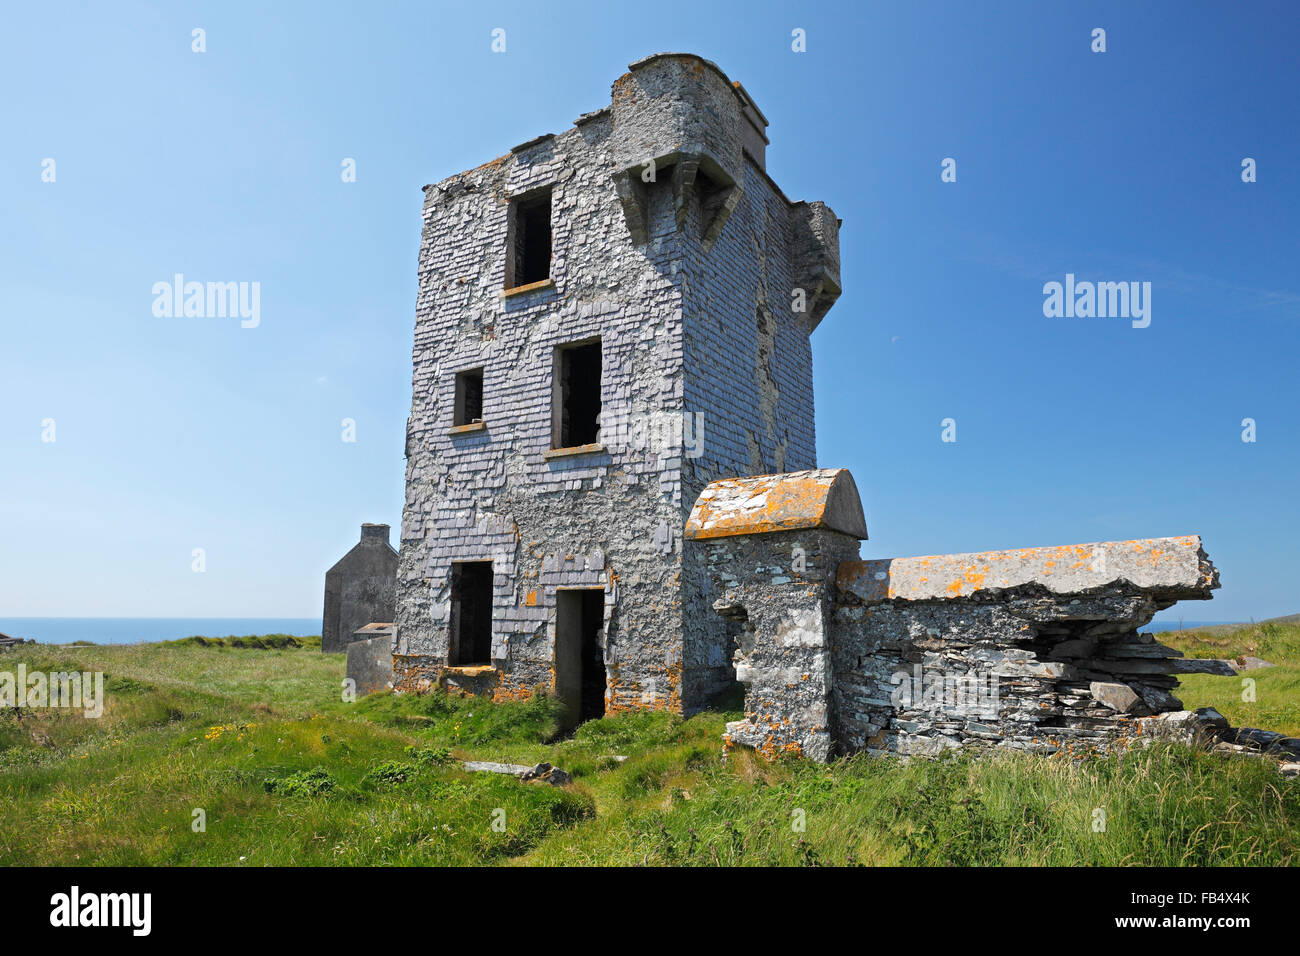 Tower ruin on Brow Head, Mizen Head Peninsula, West Cork, Ireland Stock Photo